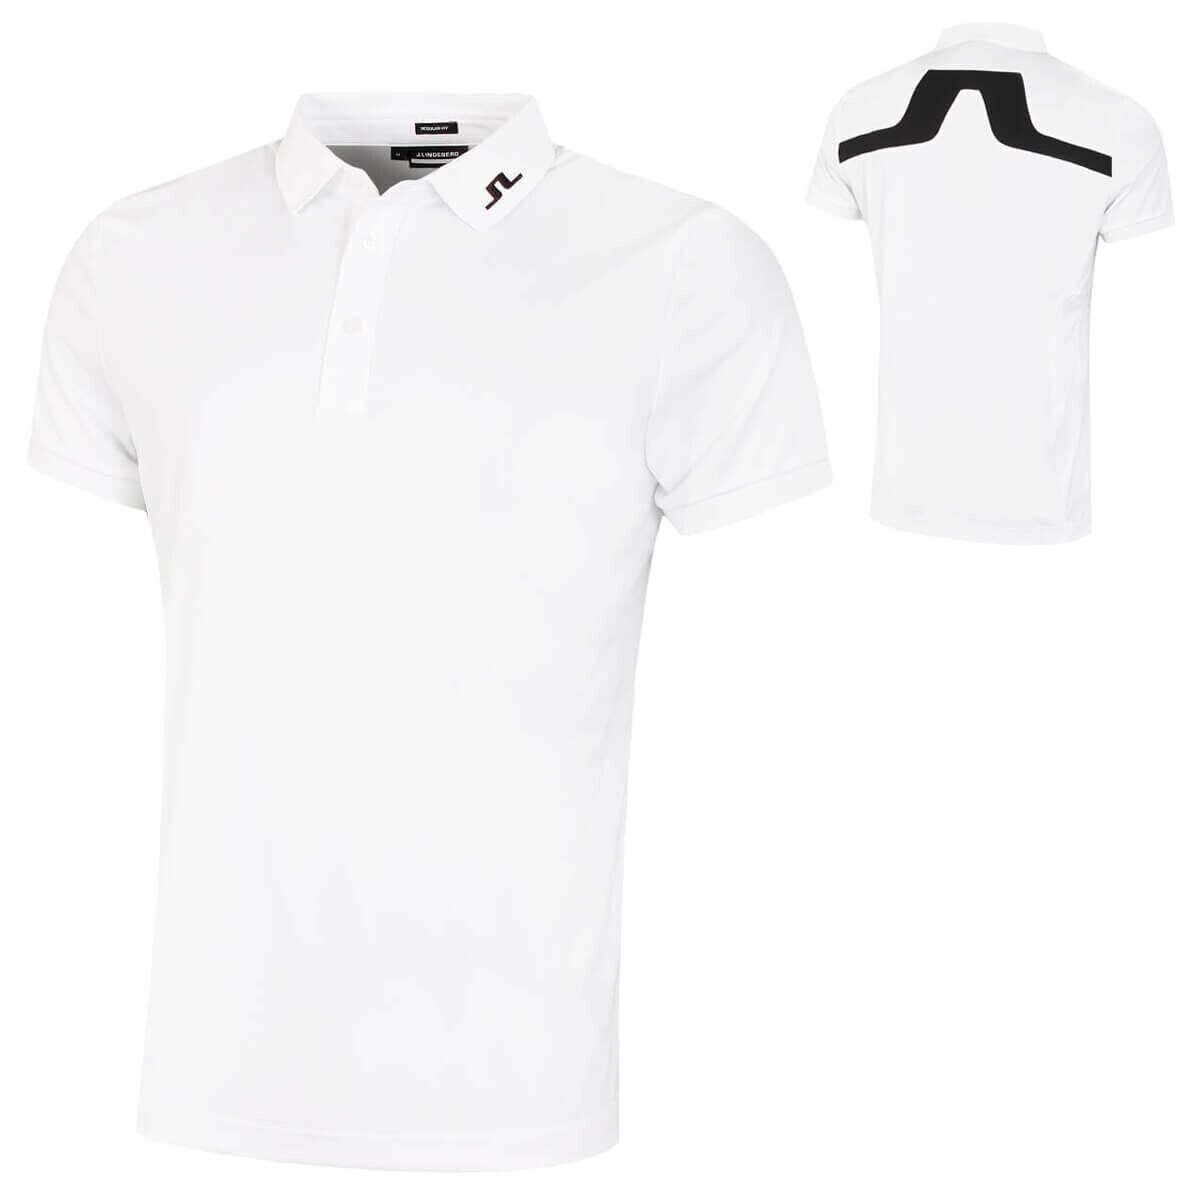 j lindeberg kv regular fit polo shirt white/blue uk size medium